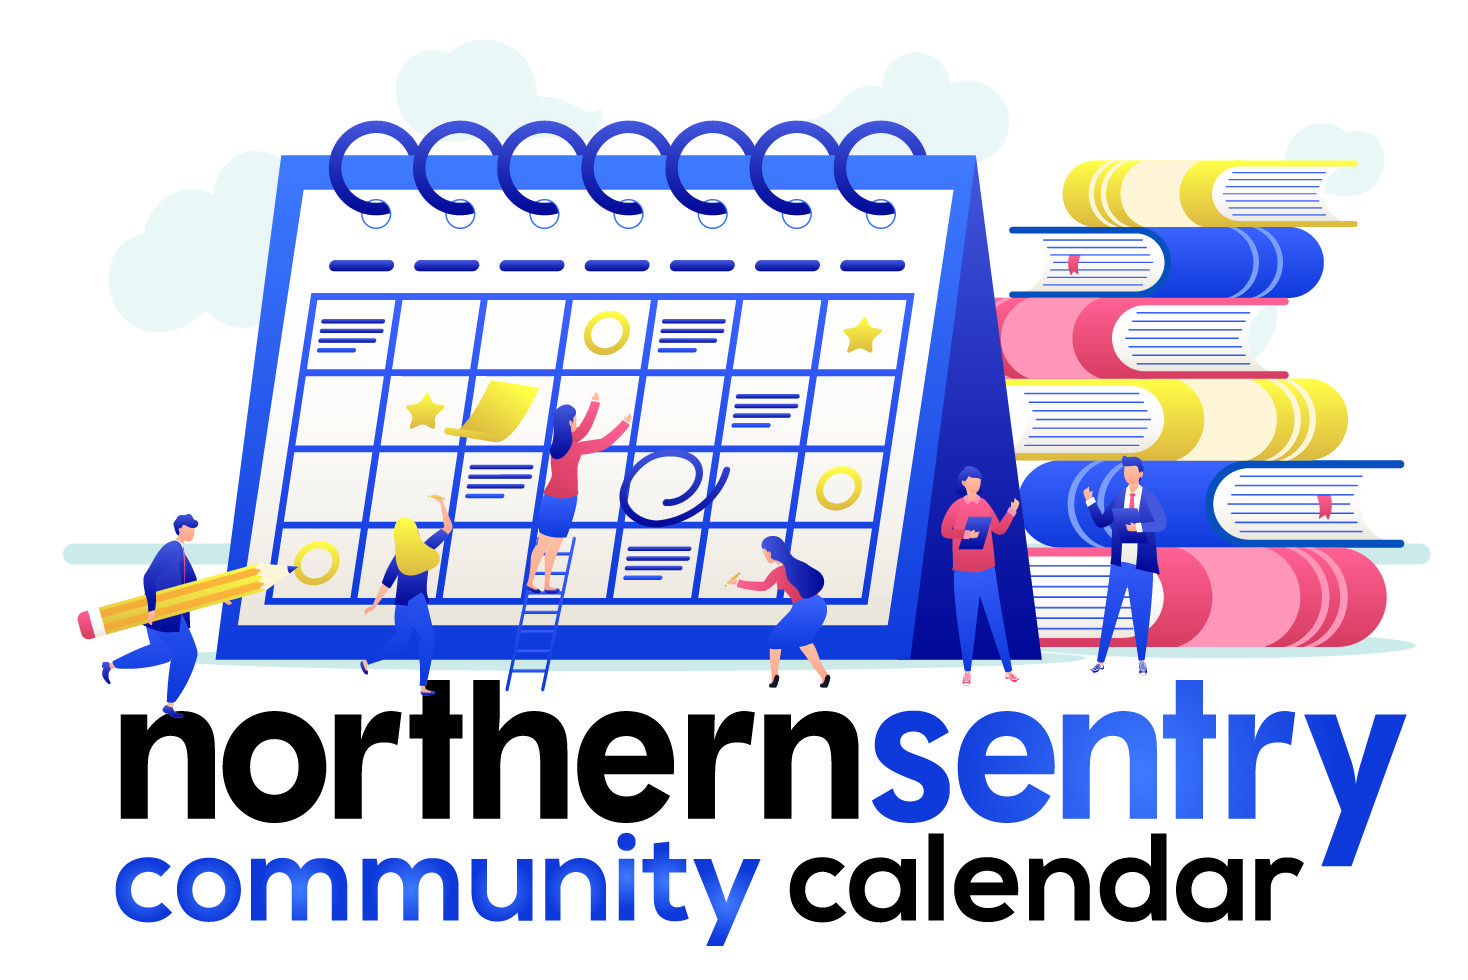 Community Calendar